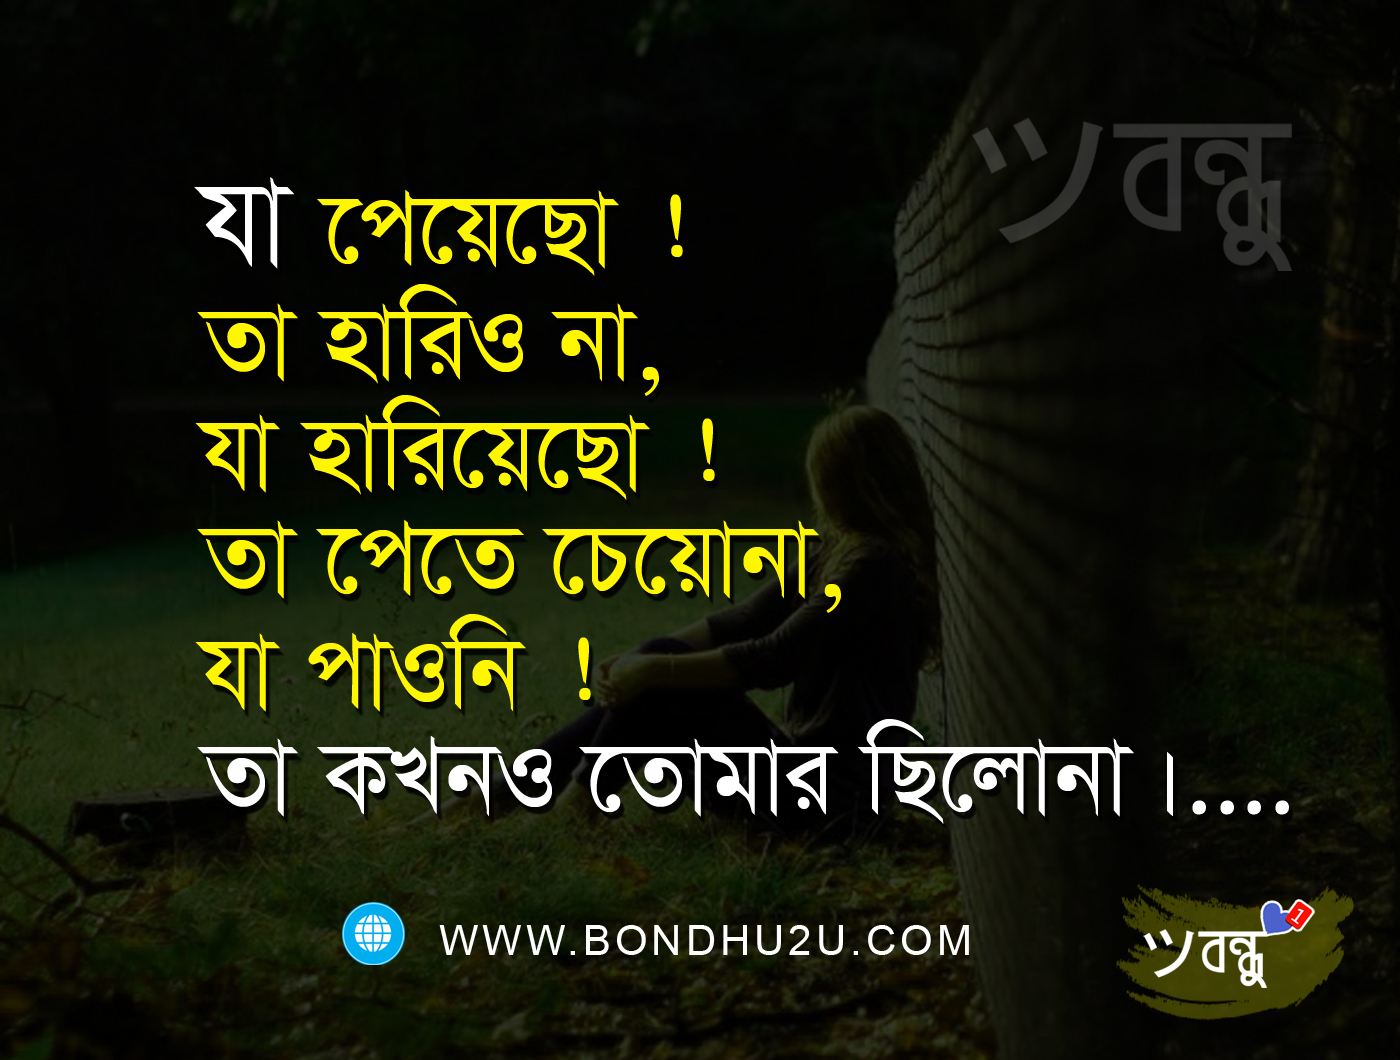 bangla kobita wallpaper download,text,font,organism,darkness,photo caption